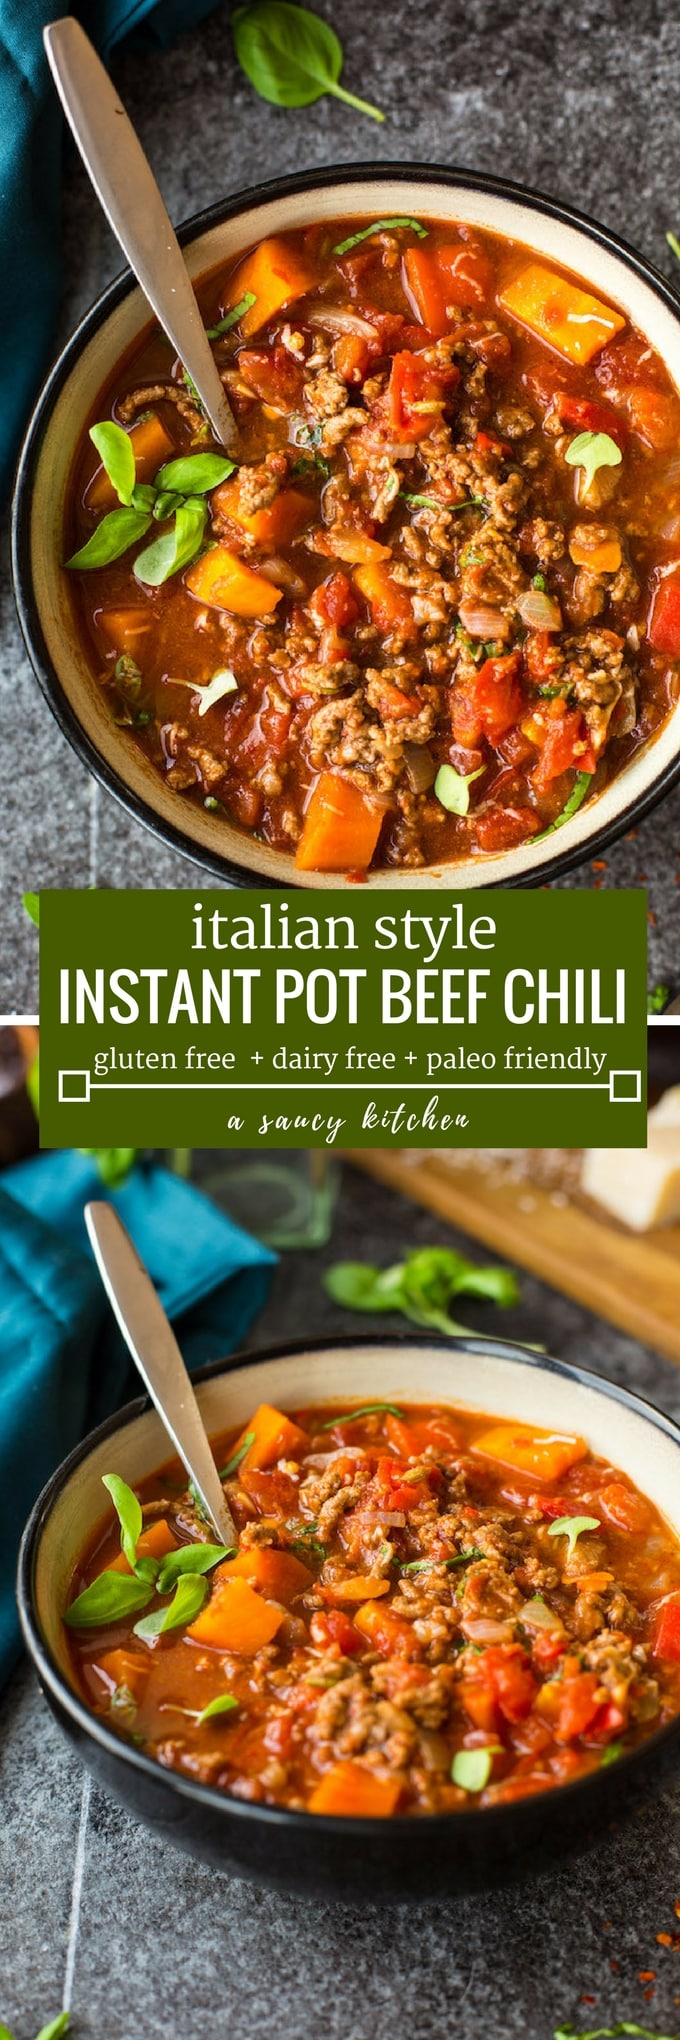 Italian style instant pot beef chili (bean free)